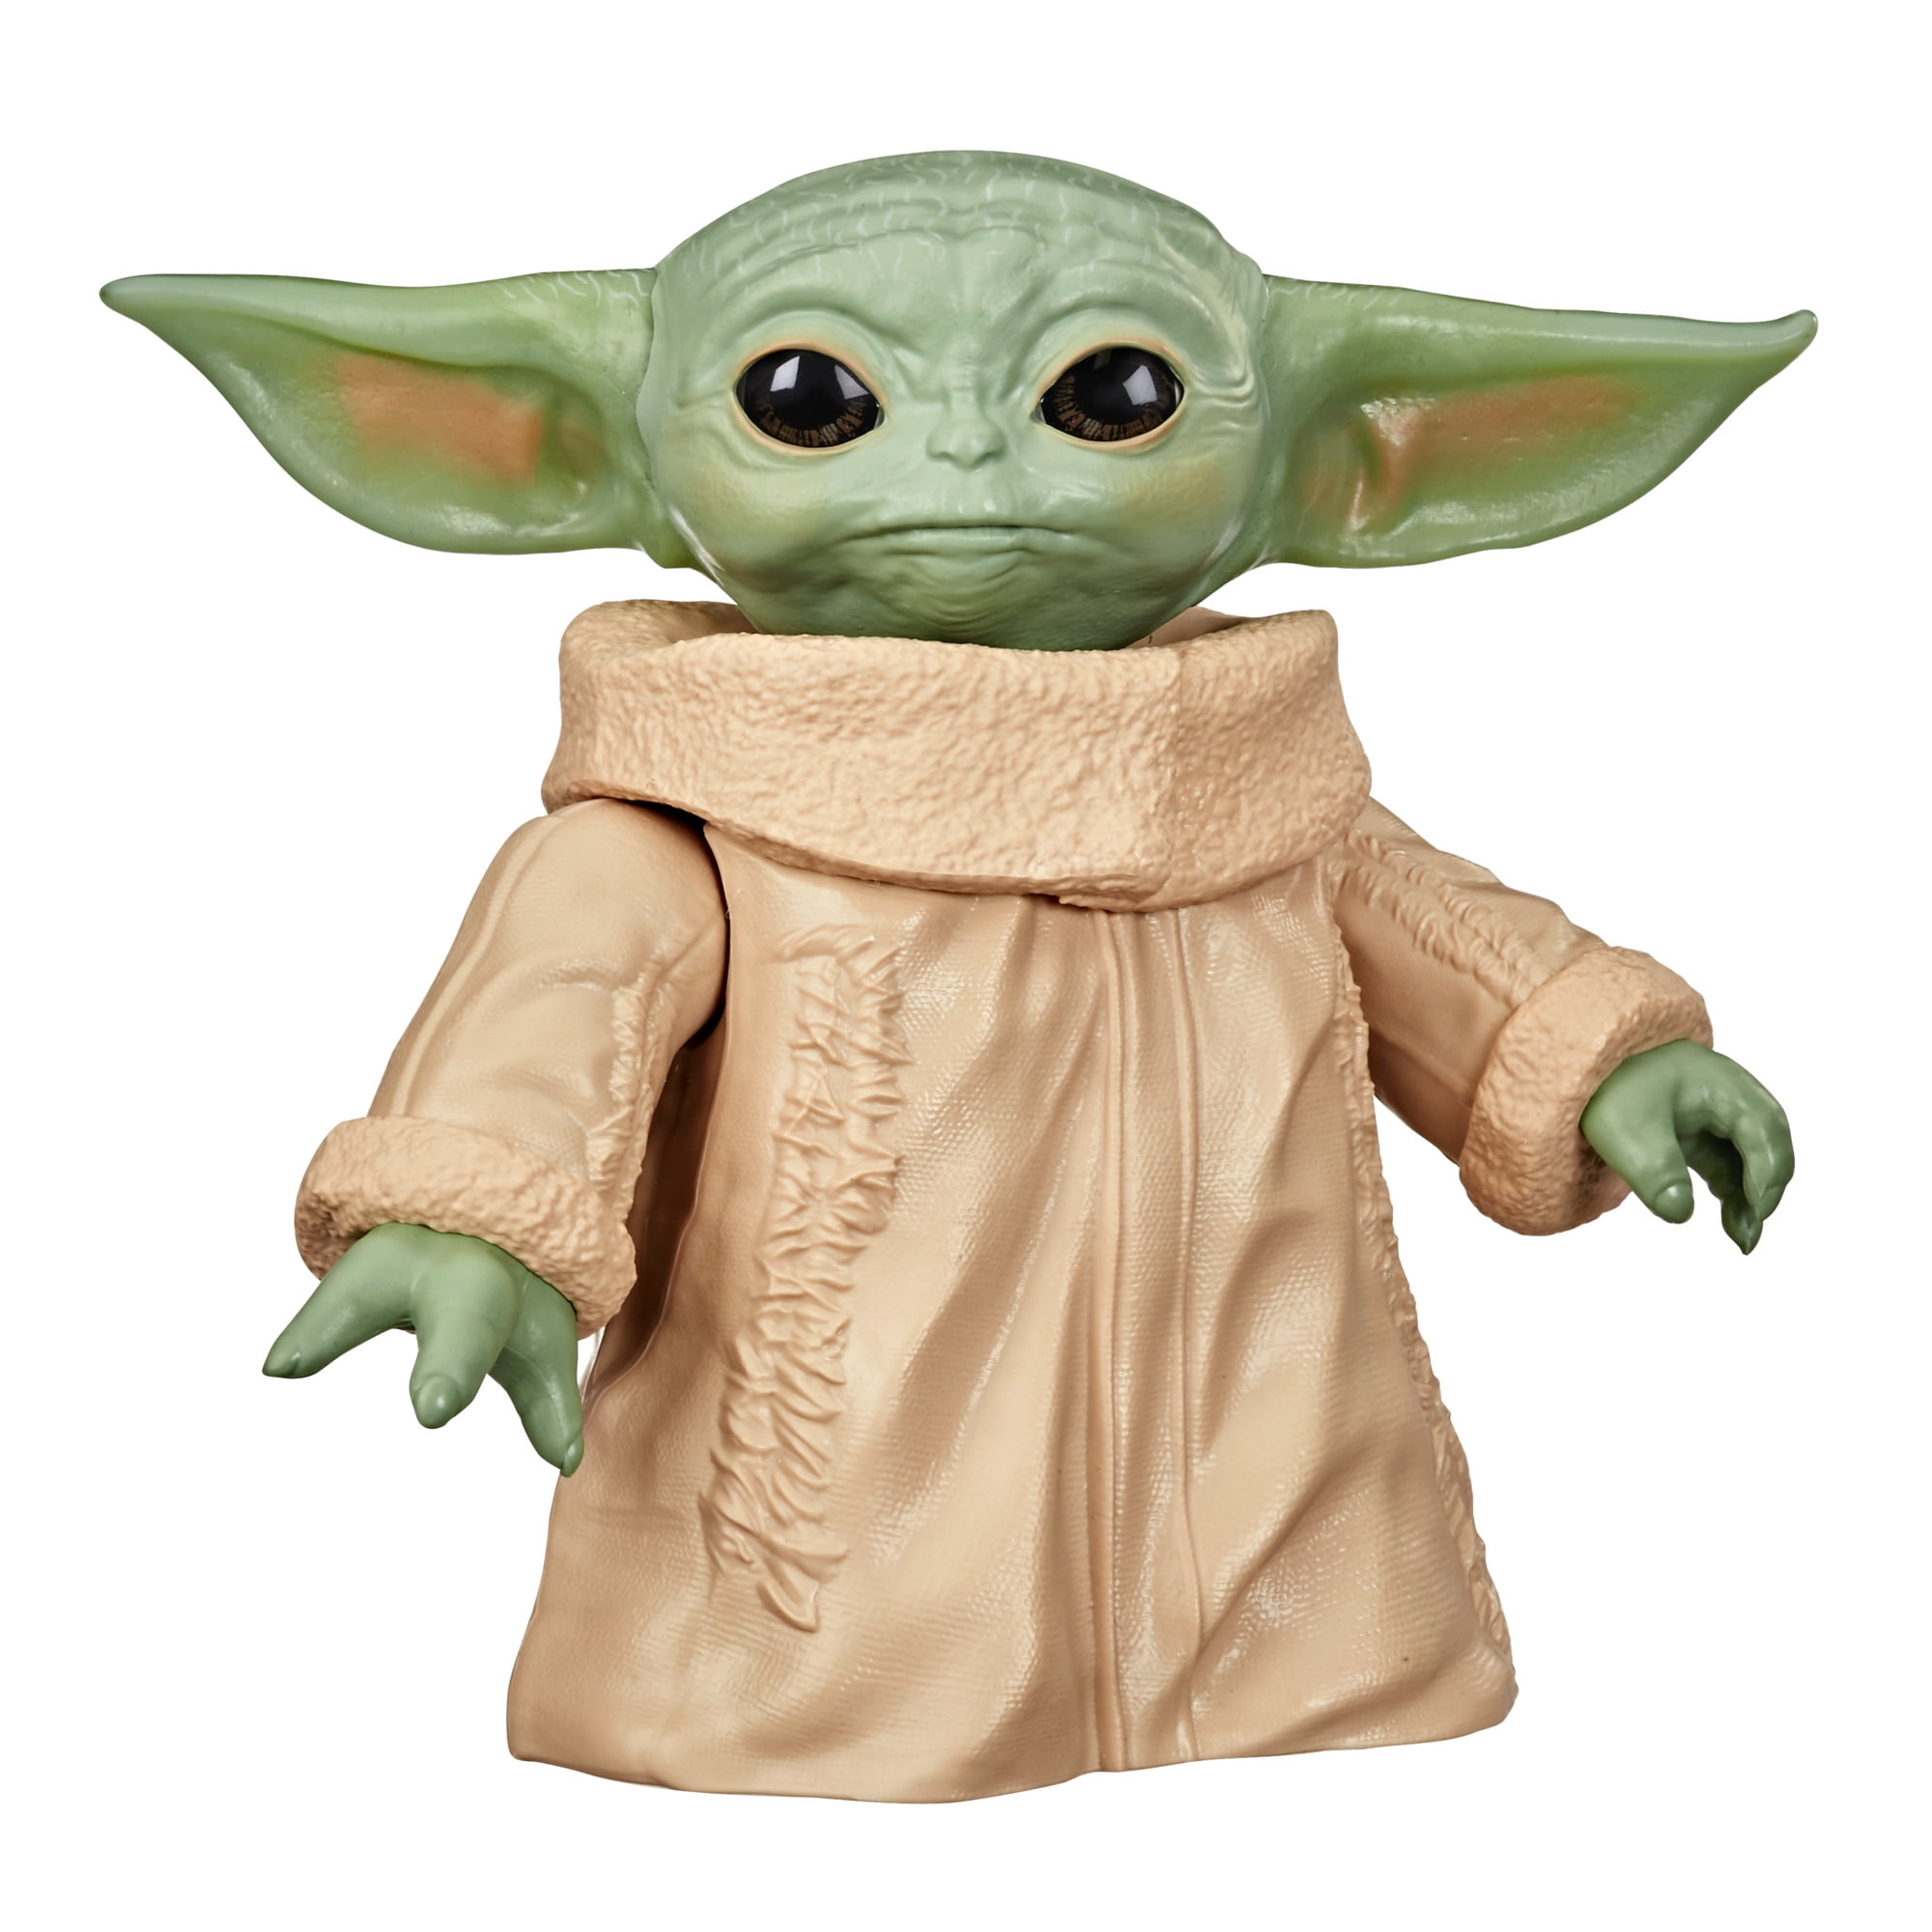 Star Wars Baby Yoda The Child The Mandalorian 6.5 pollici Hasbro toy action figure 